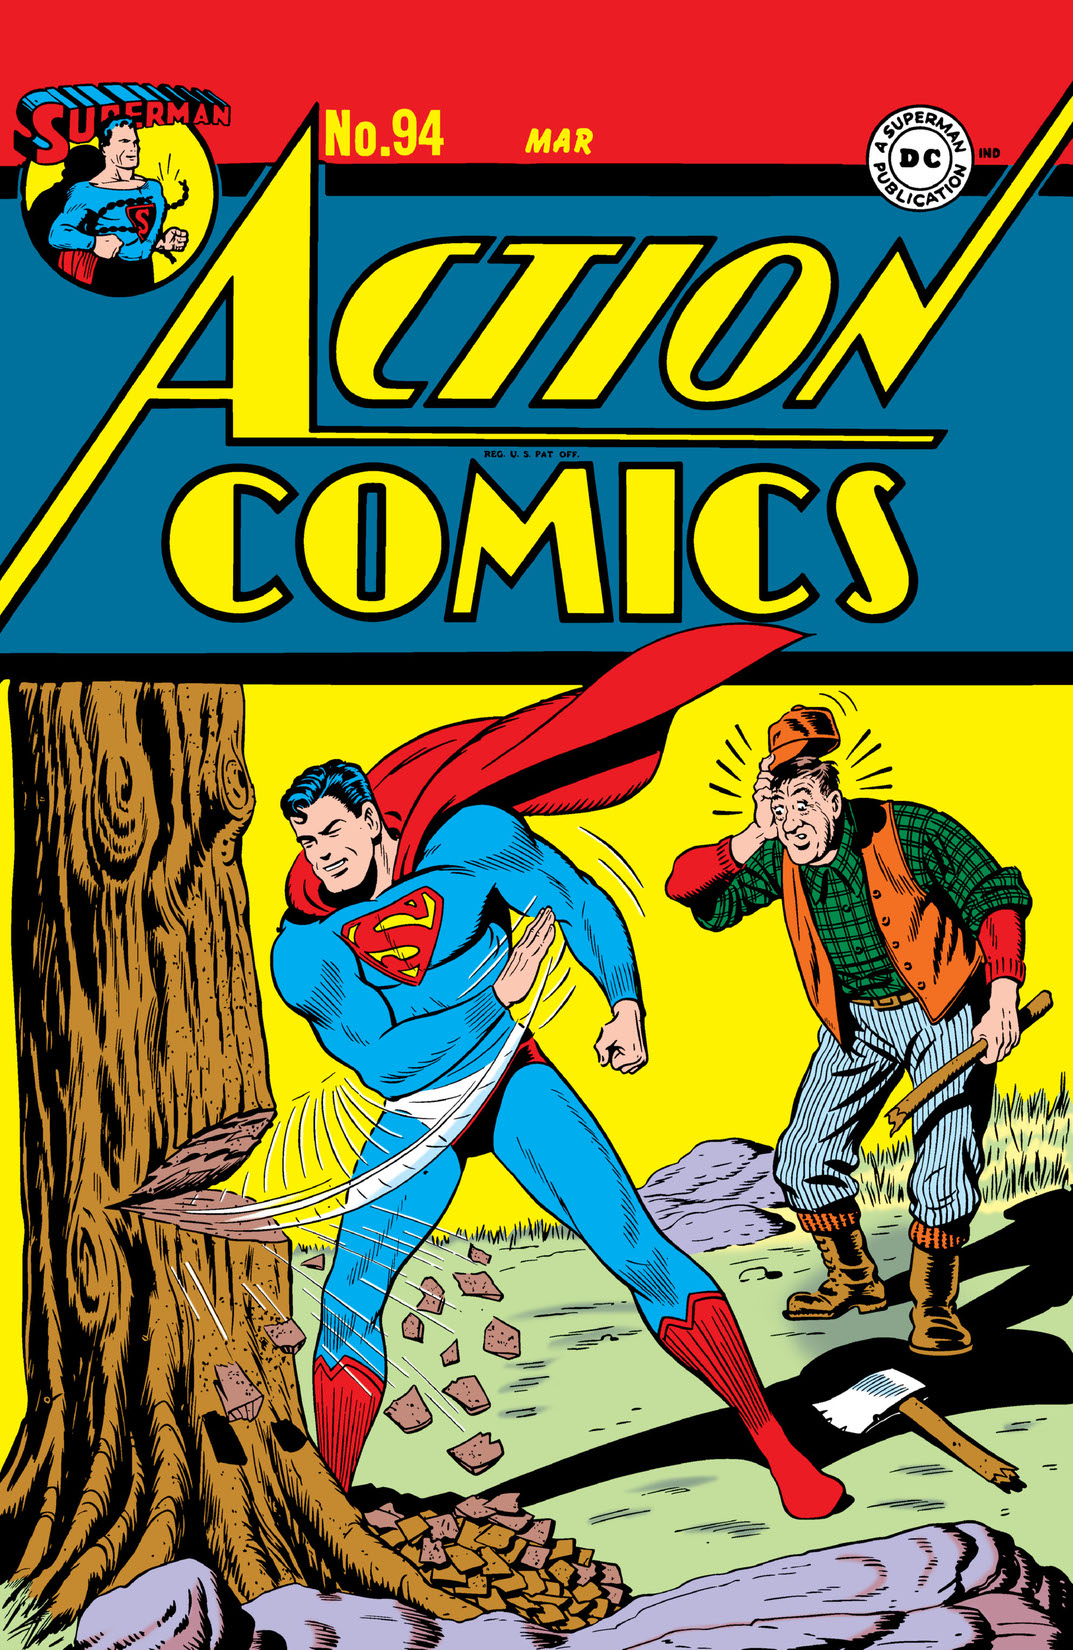 Action Comics (1938-) #94 preview images